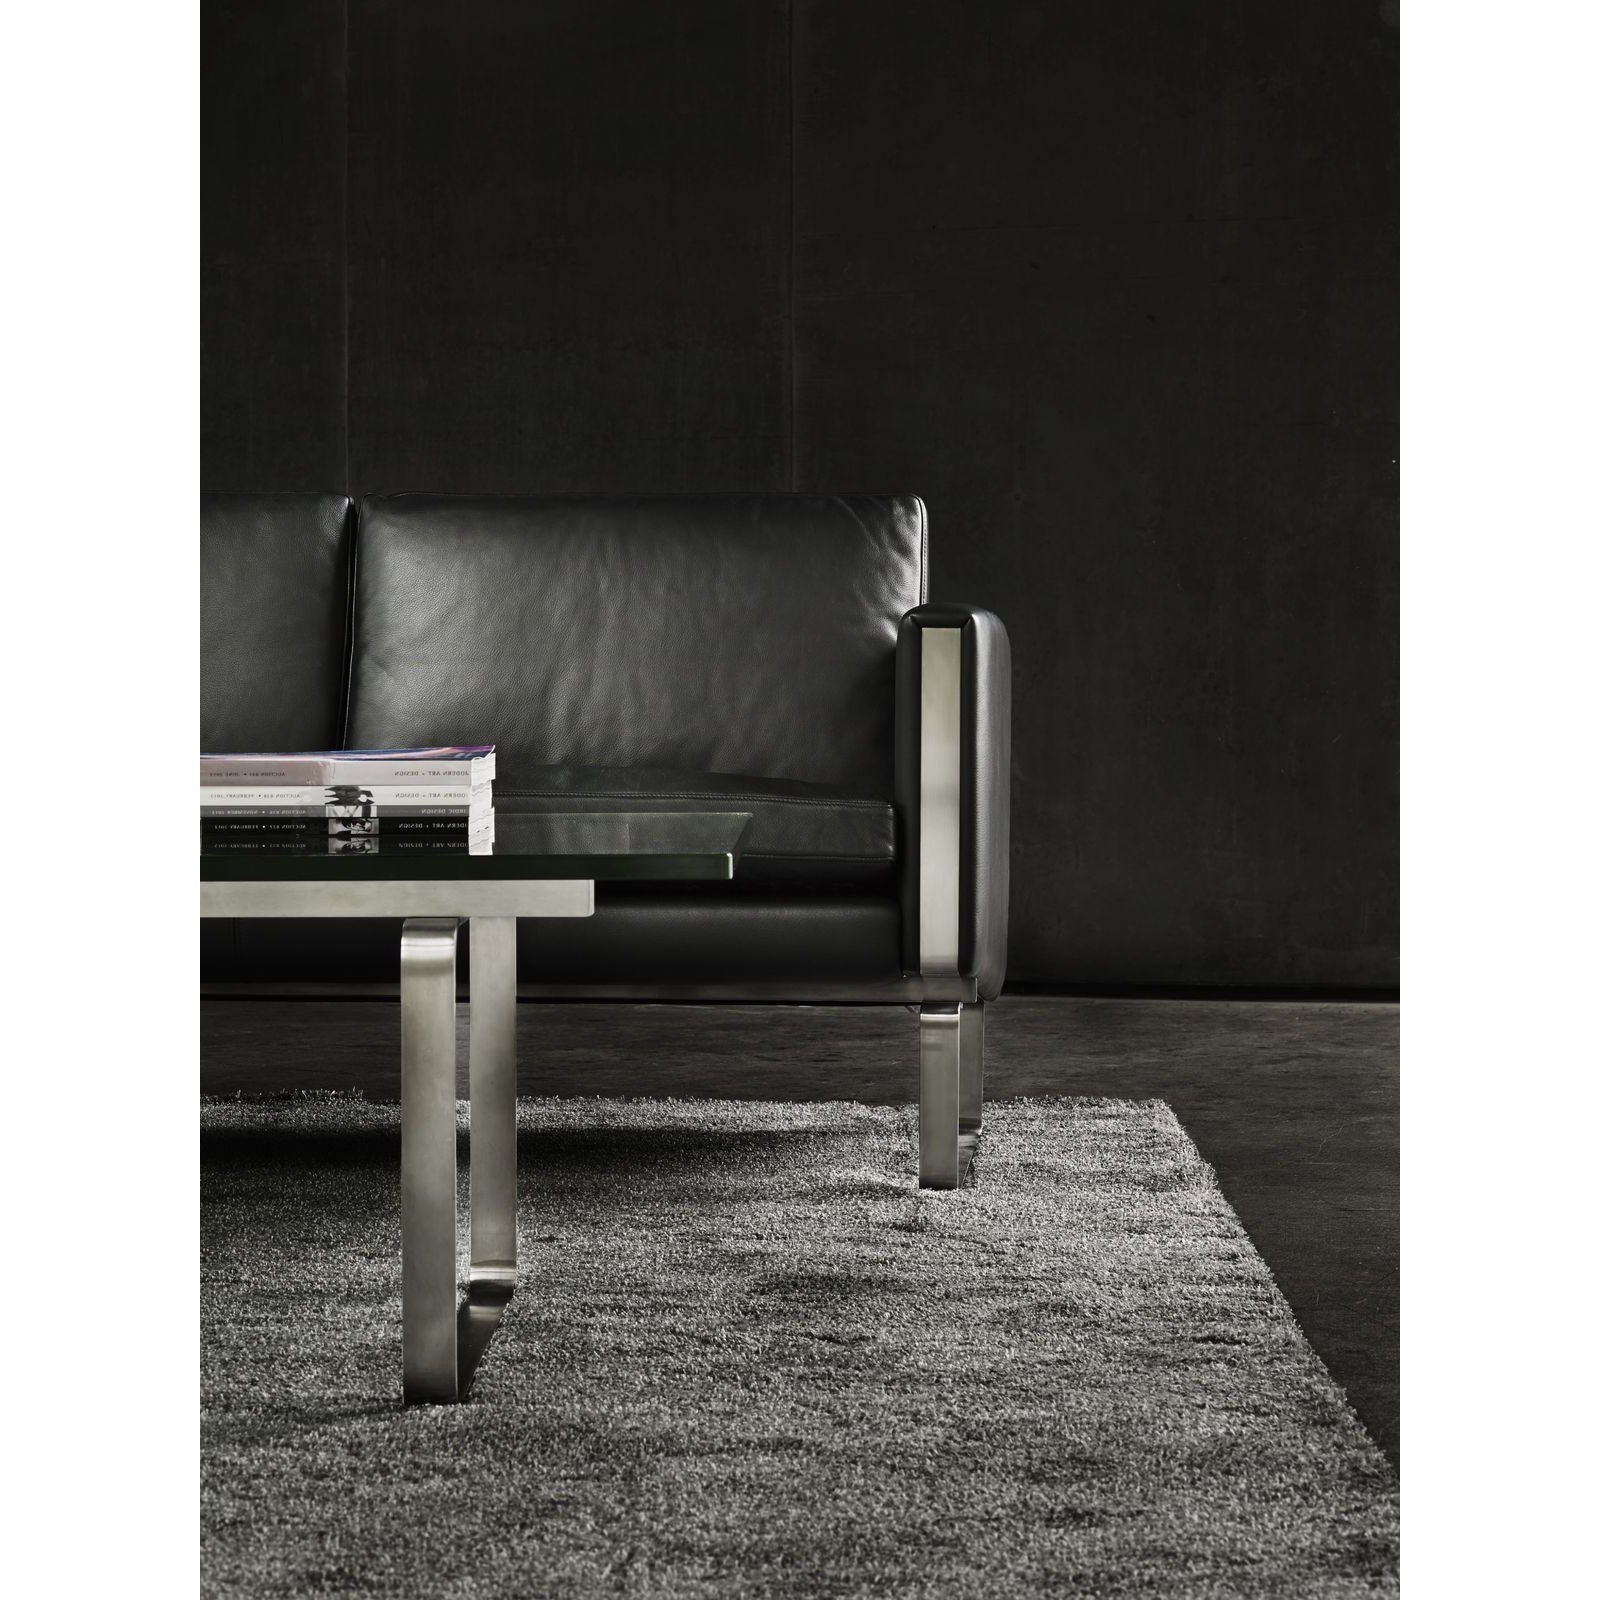 Carl Hansen CH104 divano, in acciaio/pelle nera